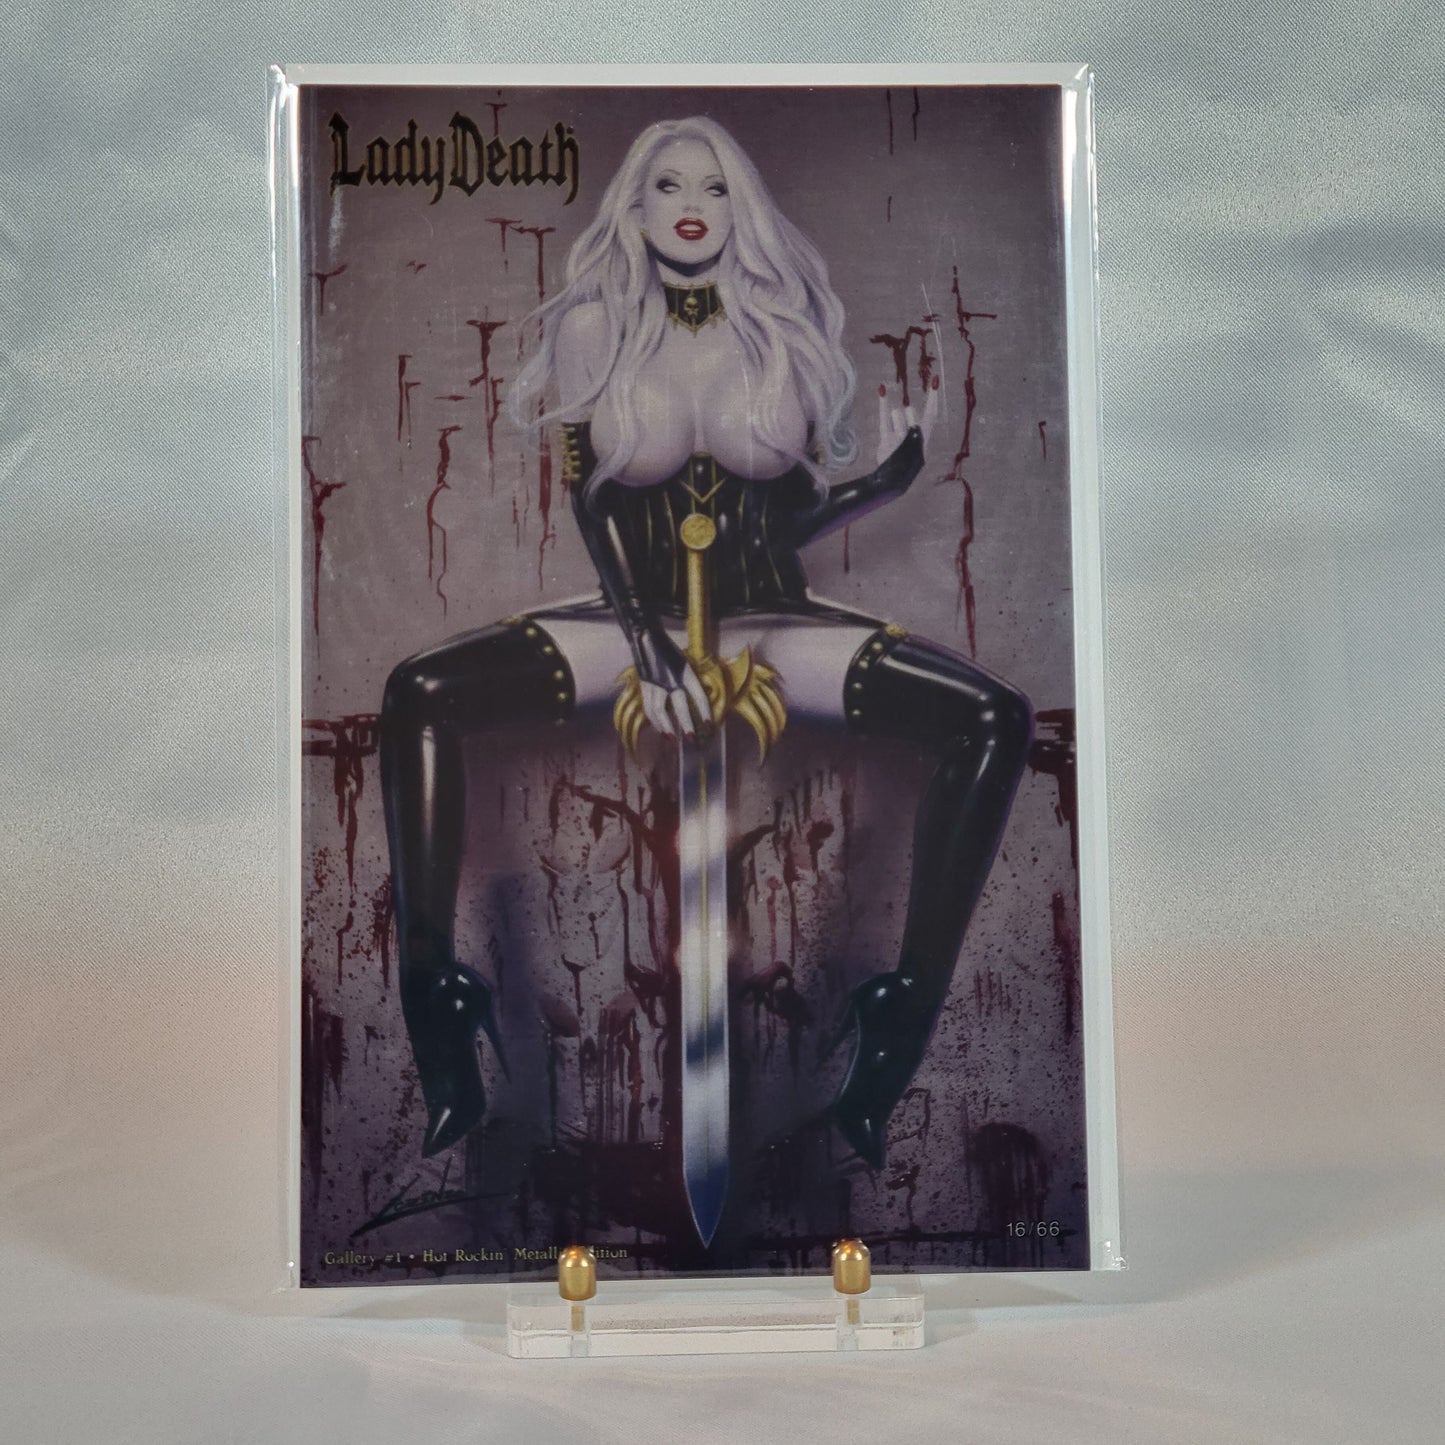 Lady Death: Gallery #1 NAUGHTY "Hot Rockin'" Metallic Edition